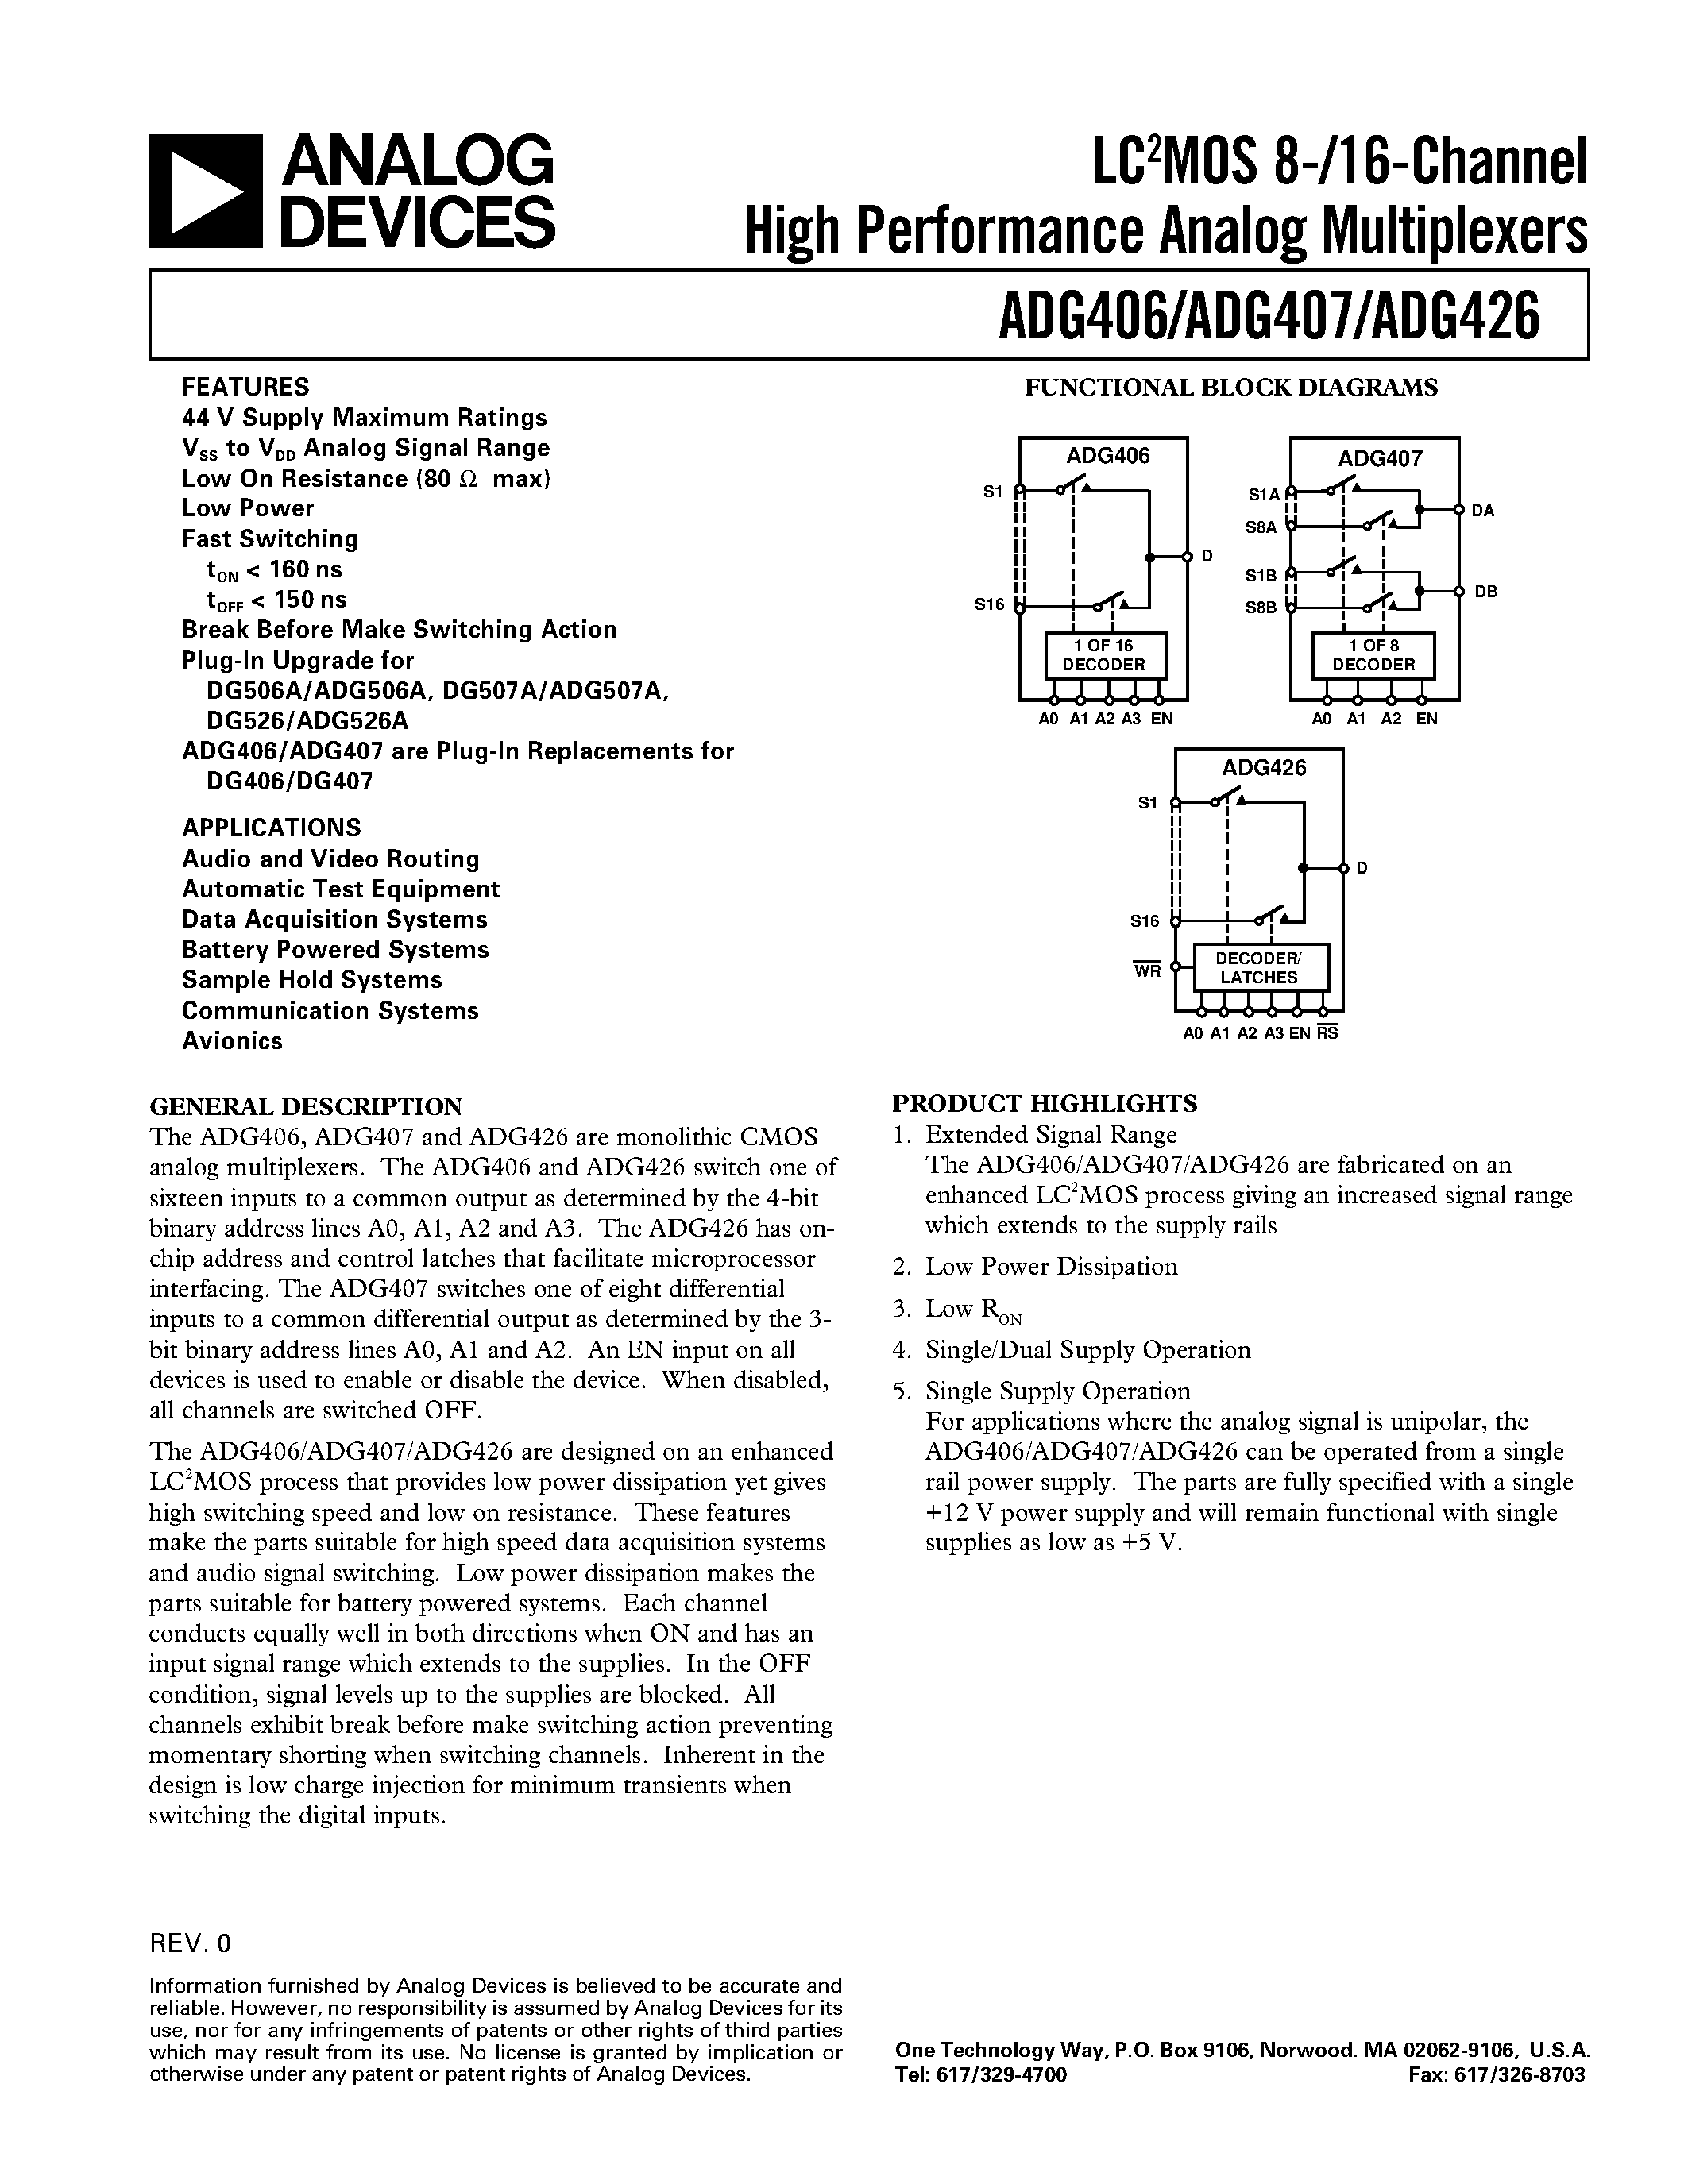 Даташит ADG407BN - LC2MOS 8-/16-Channel High Performance Analog Multiplexers страница 1